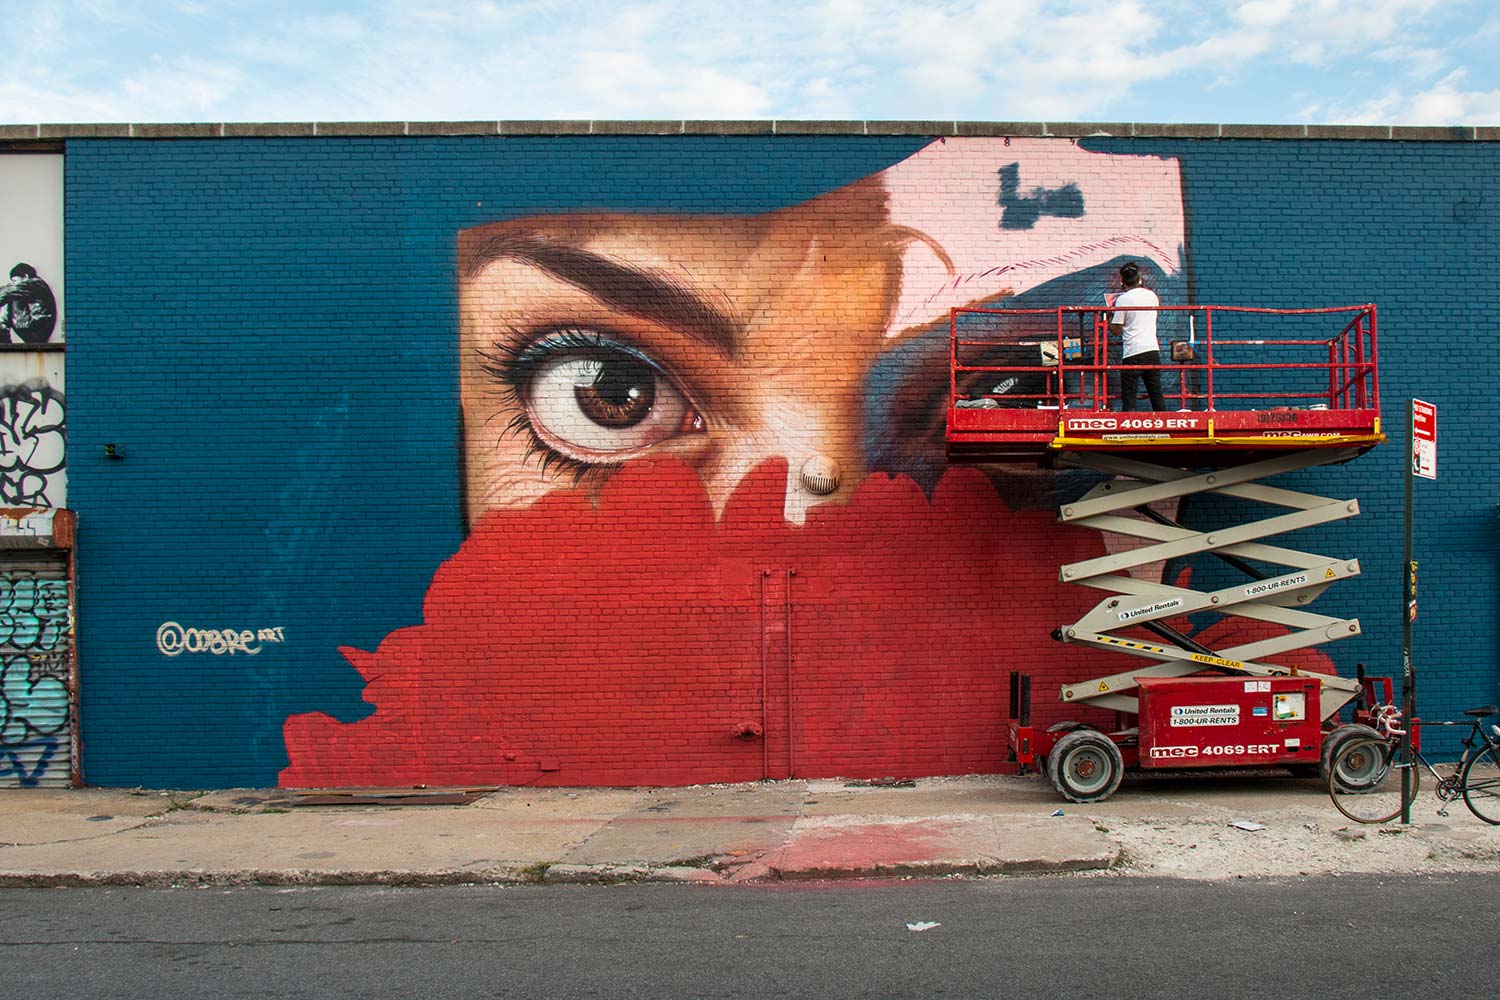 Tour de murales Bushwick Collective, Brooklyn, New York, NY, États-Unis / Bushwick Collective street art tour, Brooklyn, New York, NY, USA